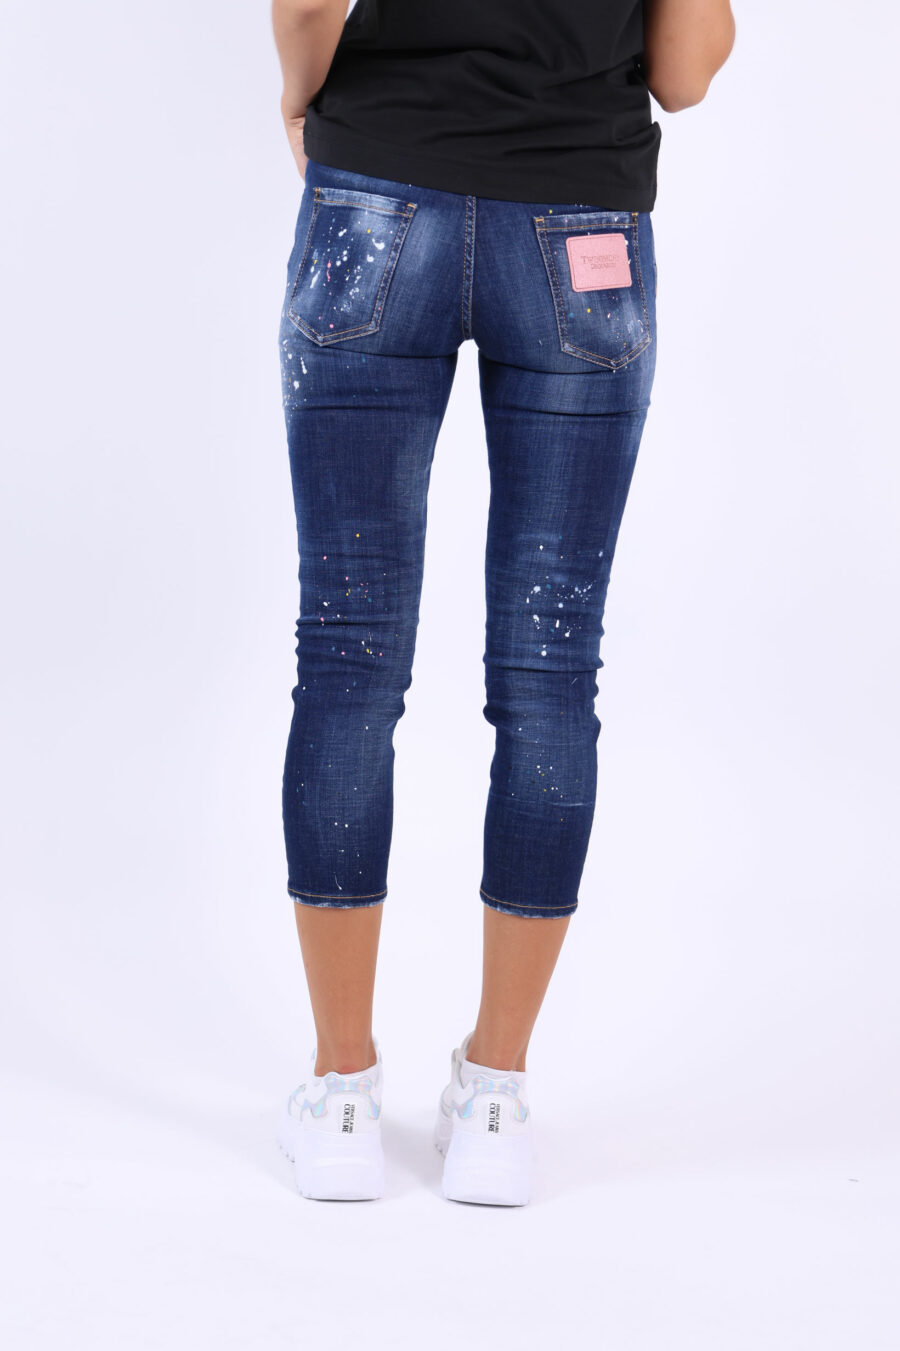 Cool girl cropped jean trousers "Cool girl cropped jean" blau mit Rissen getragen - 361223054662202025